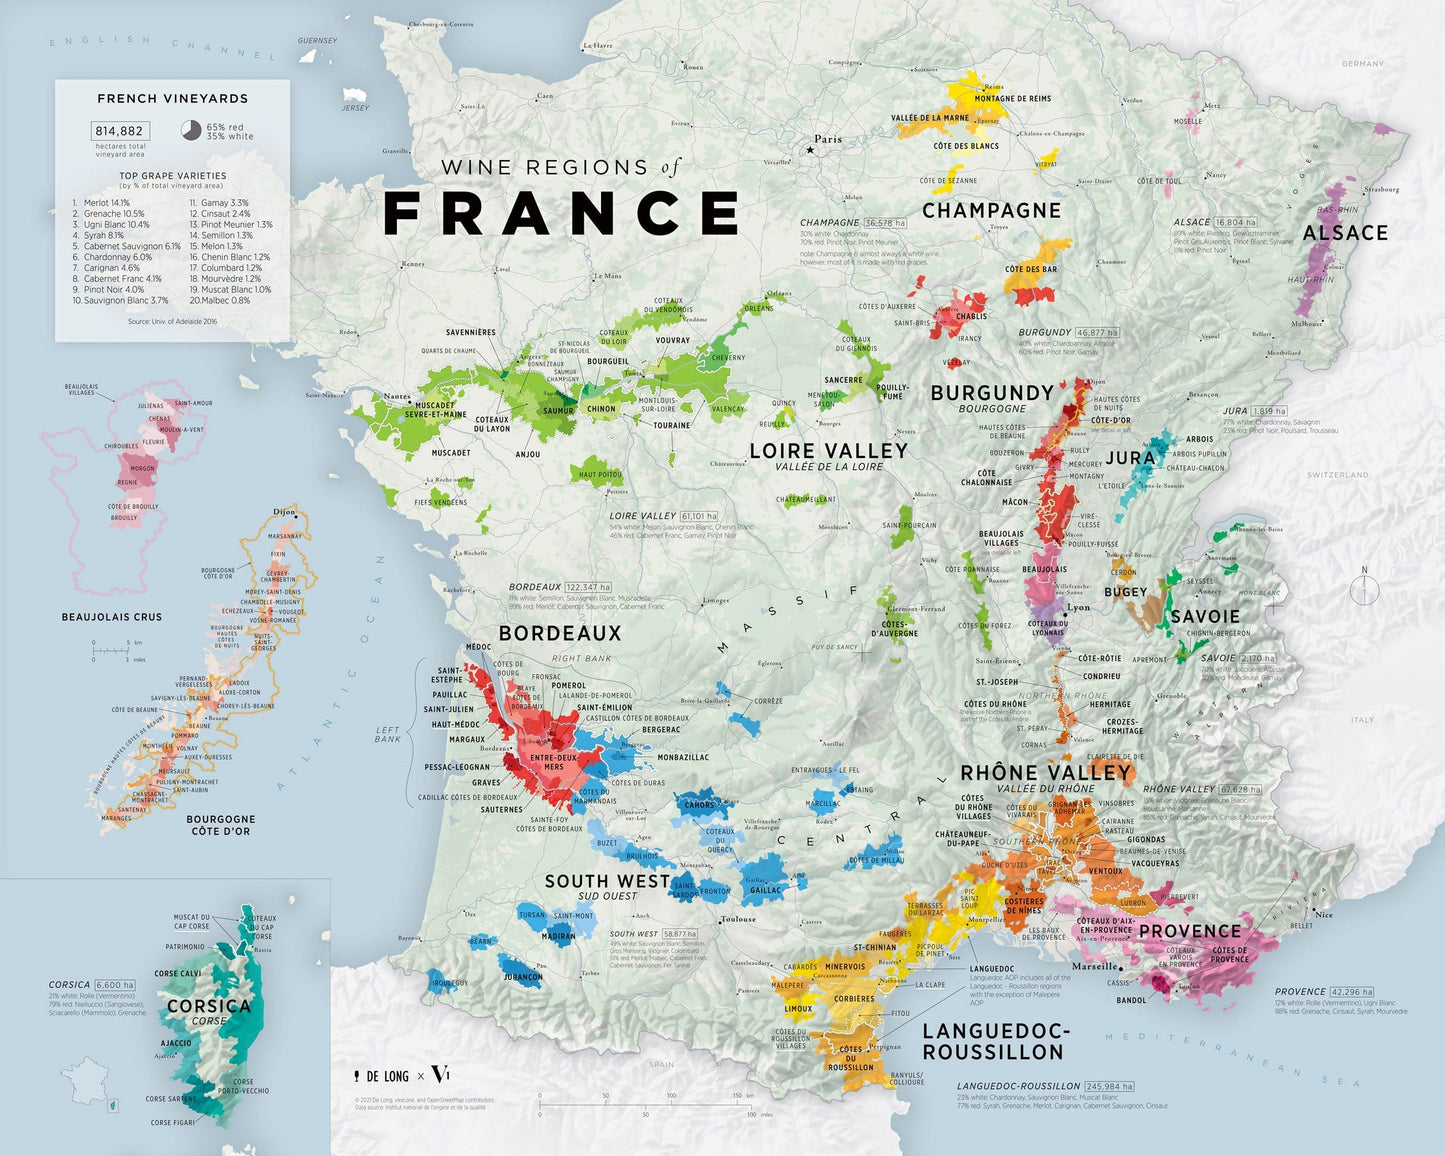 Wine region of France